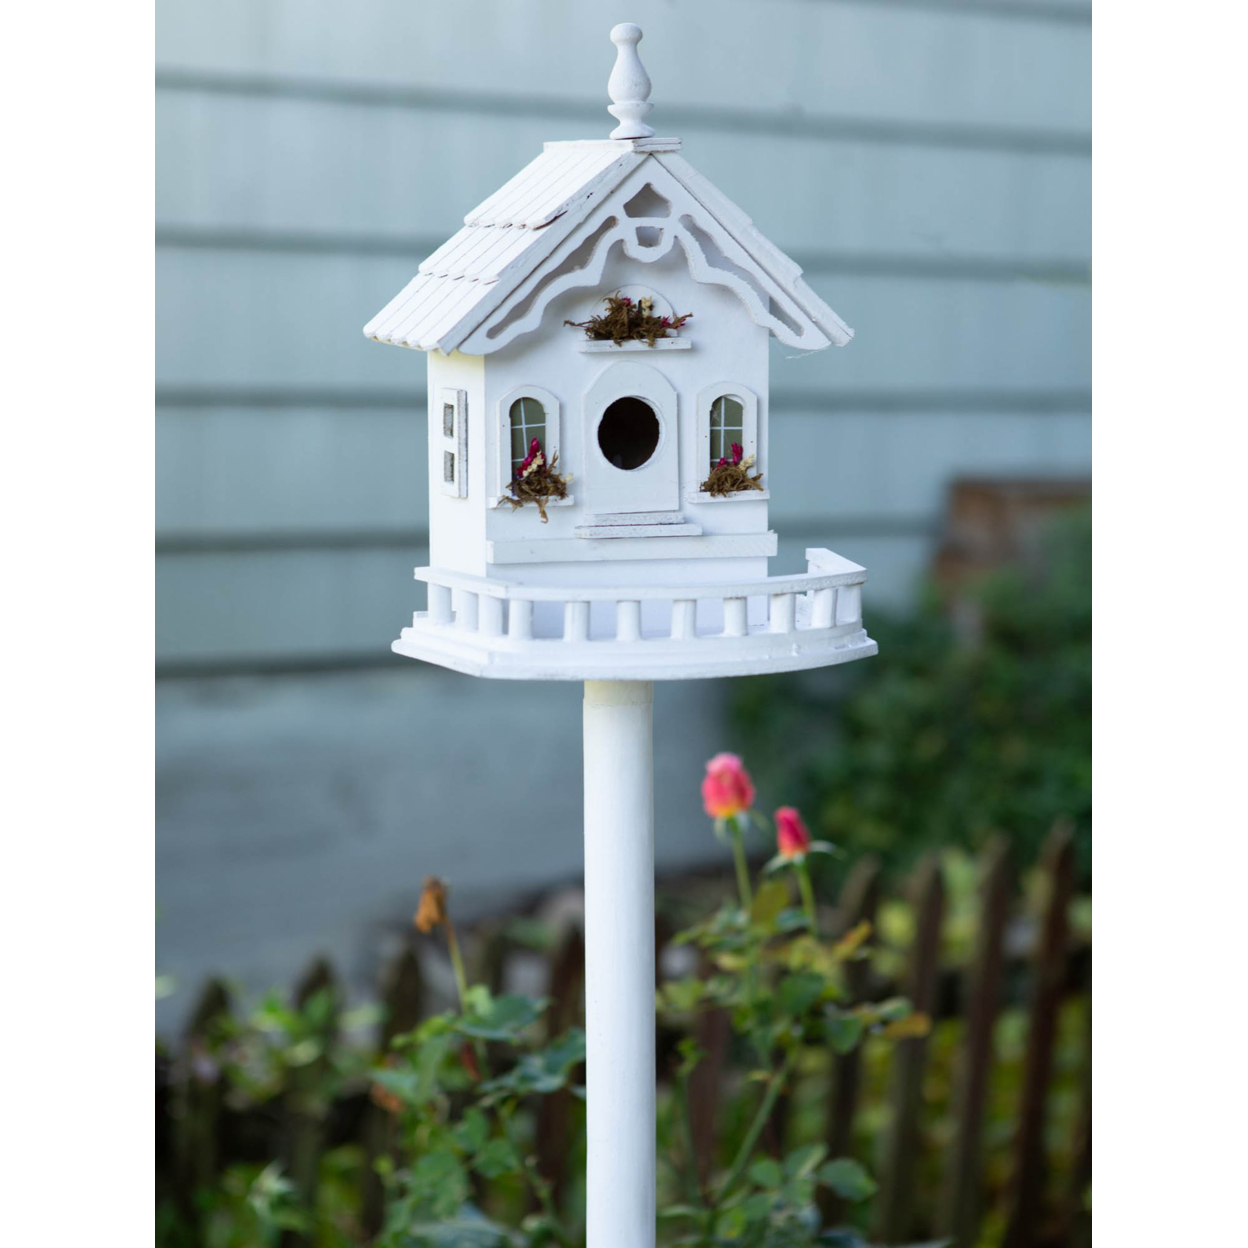 Home Decorative Victorian Pedestal Bird House - White - image 3 of 6